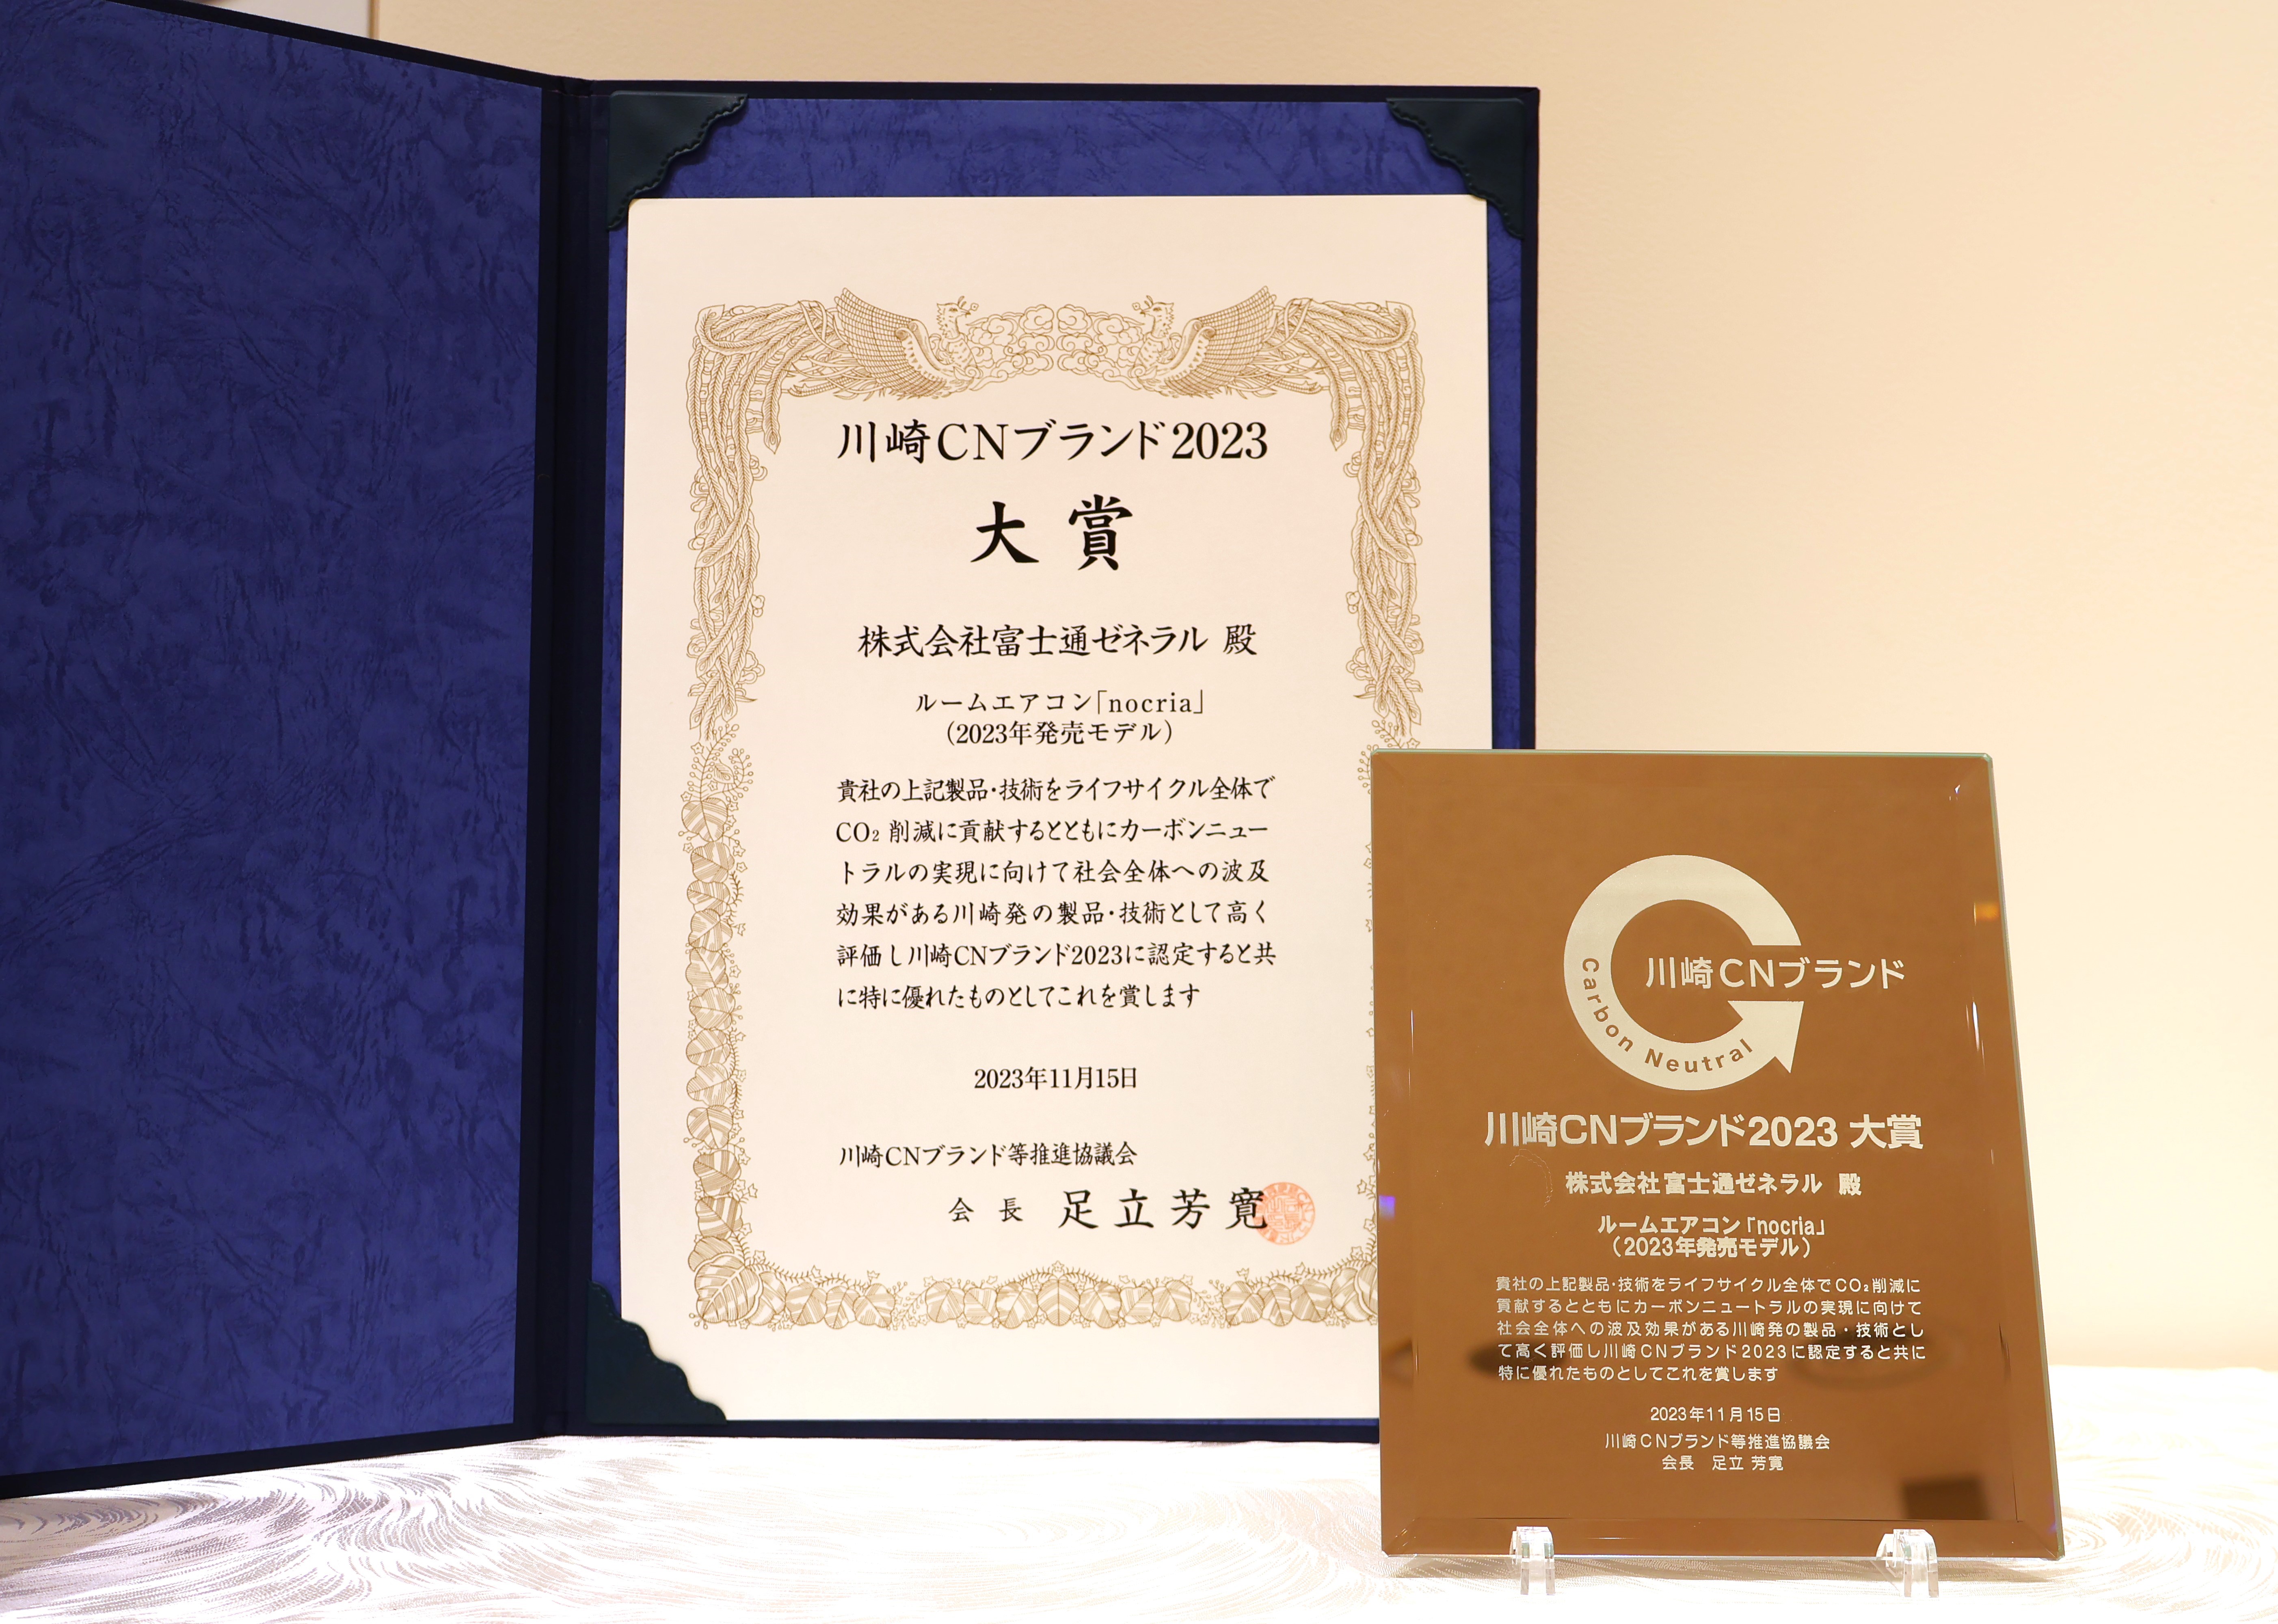 Kawasaki CN Brand 2023 certificate and plaque